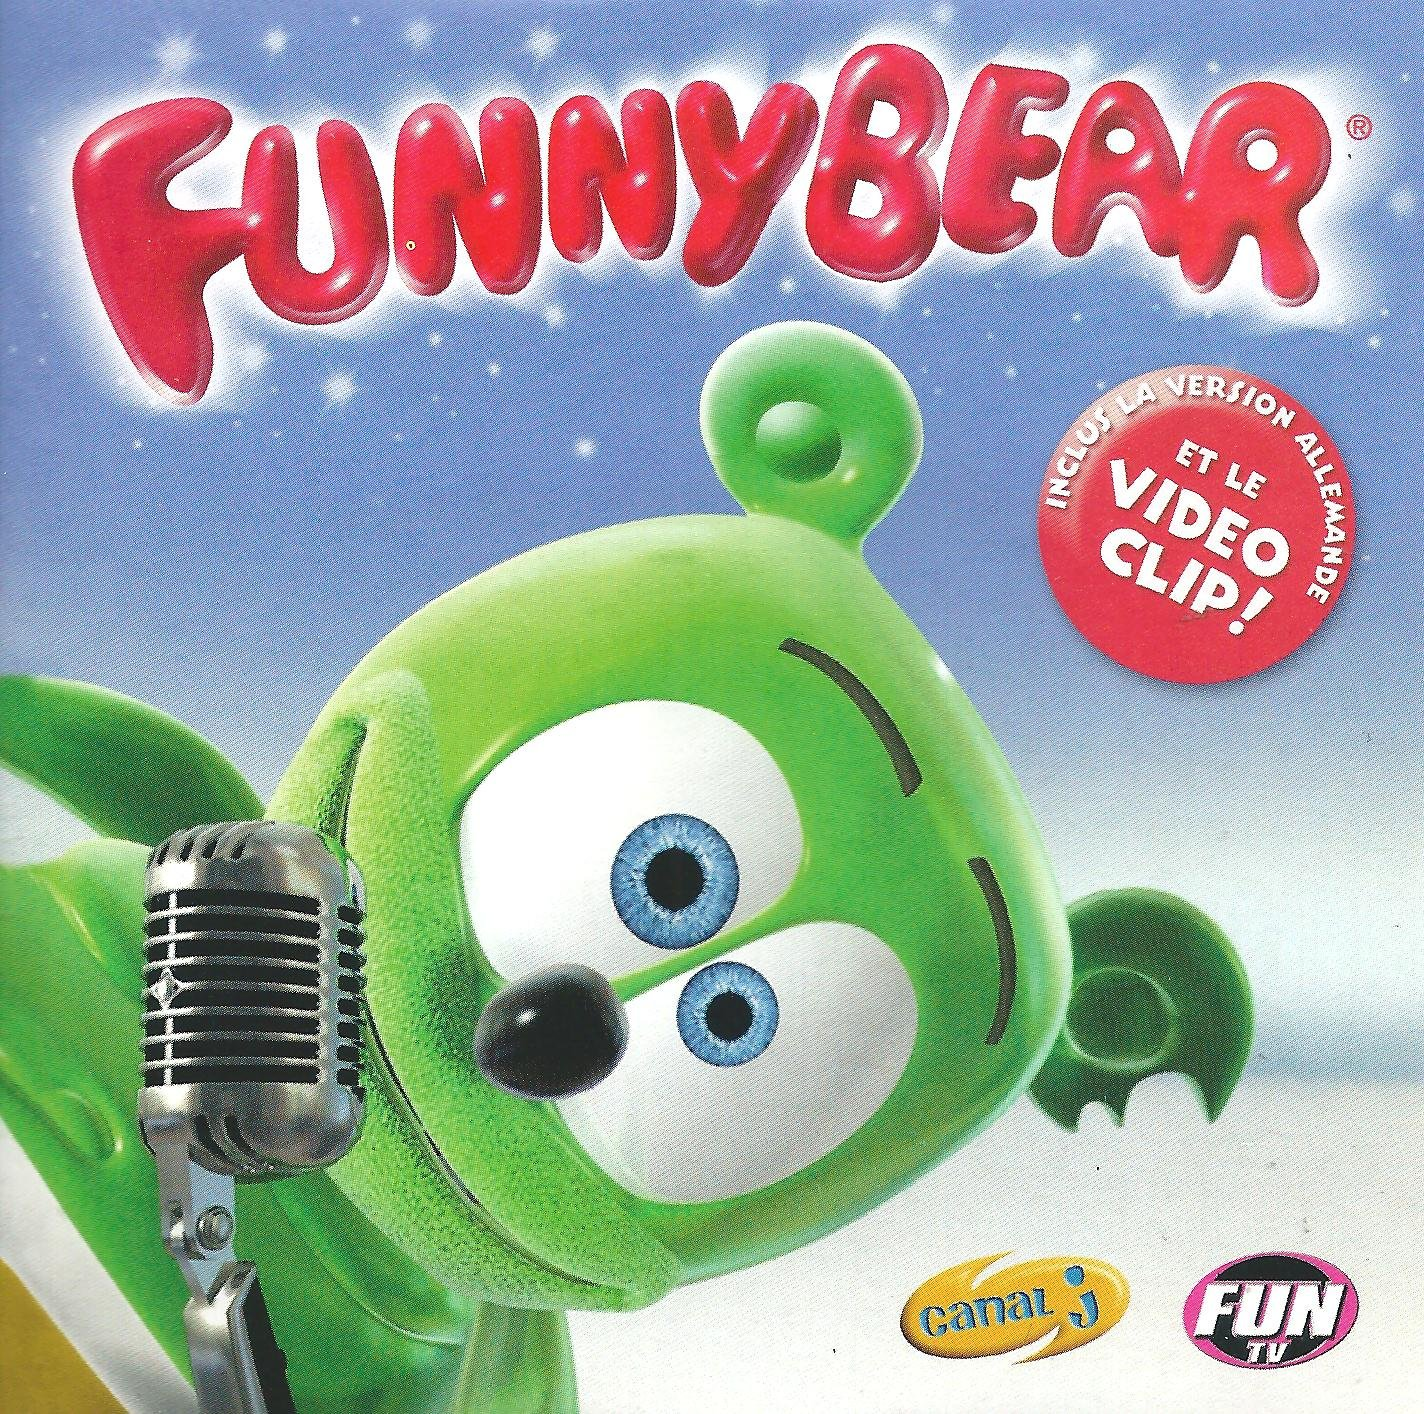 Gummy Bear (Gummibär) - FunnyBear